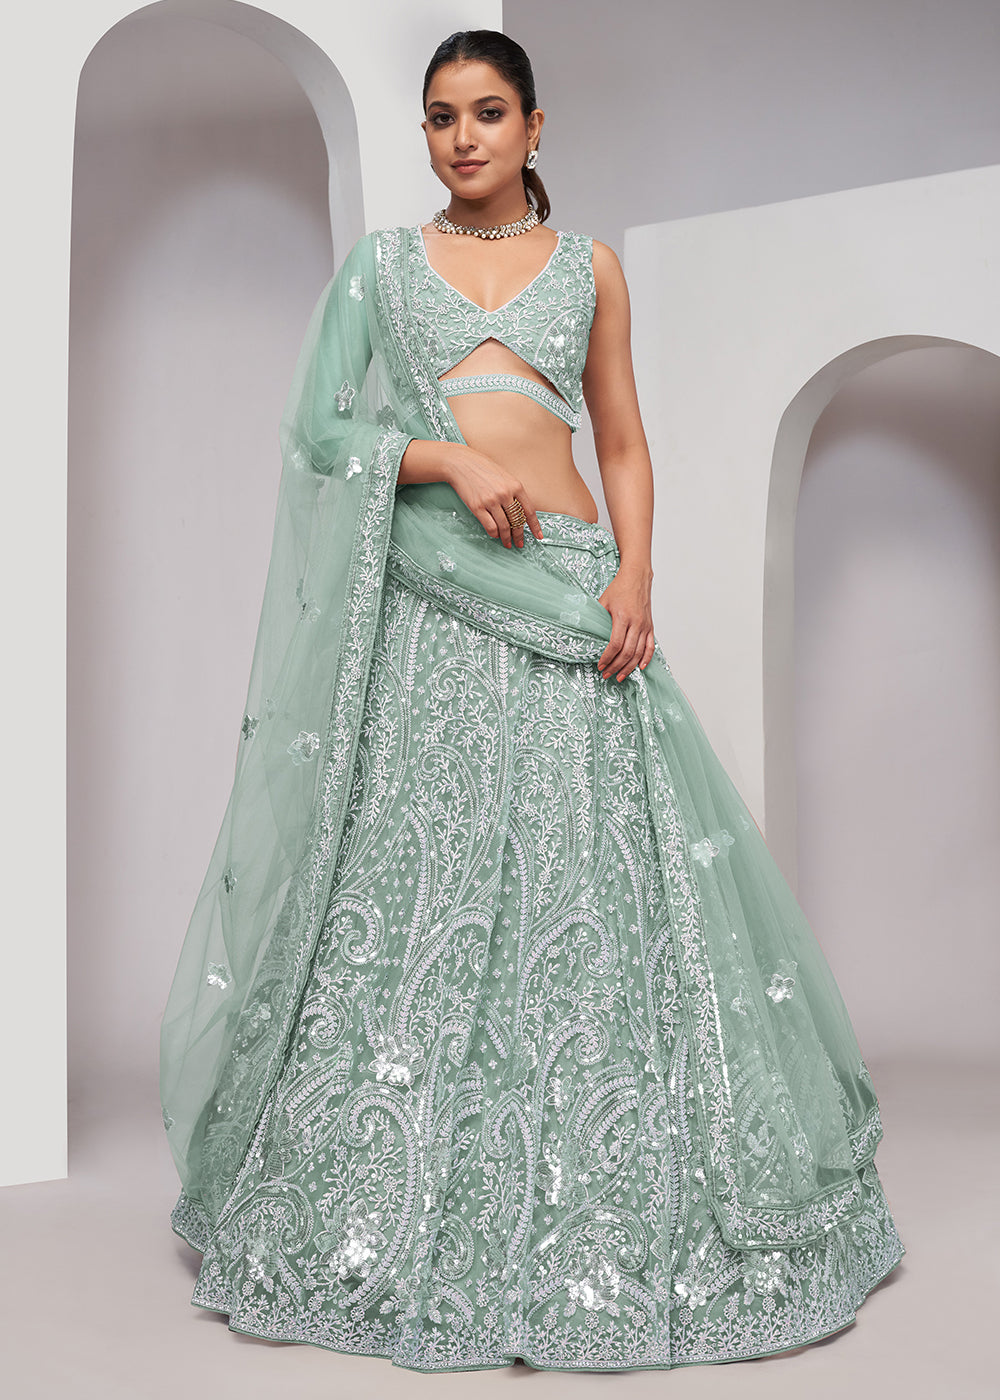 Buy Now Luxurious Sky Blue Heavy Embroidered Bridal Lehenga Choli Online in USA, UK, Canada & Worldwide at Empress Clothing.